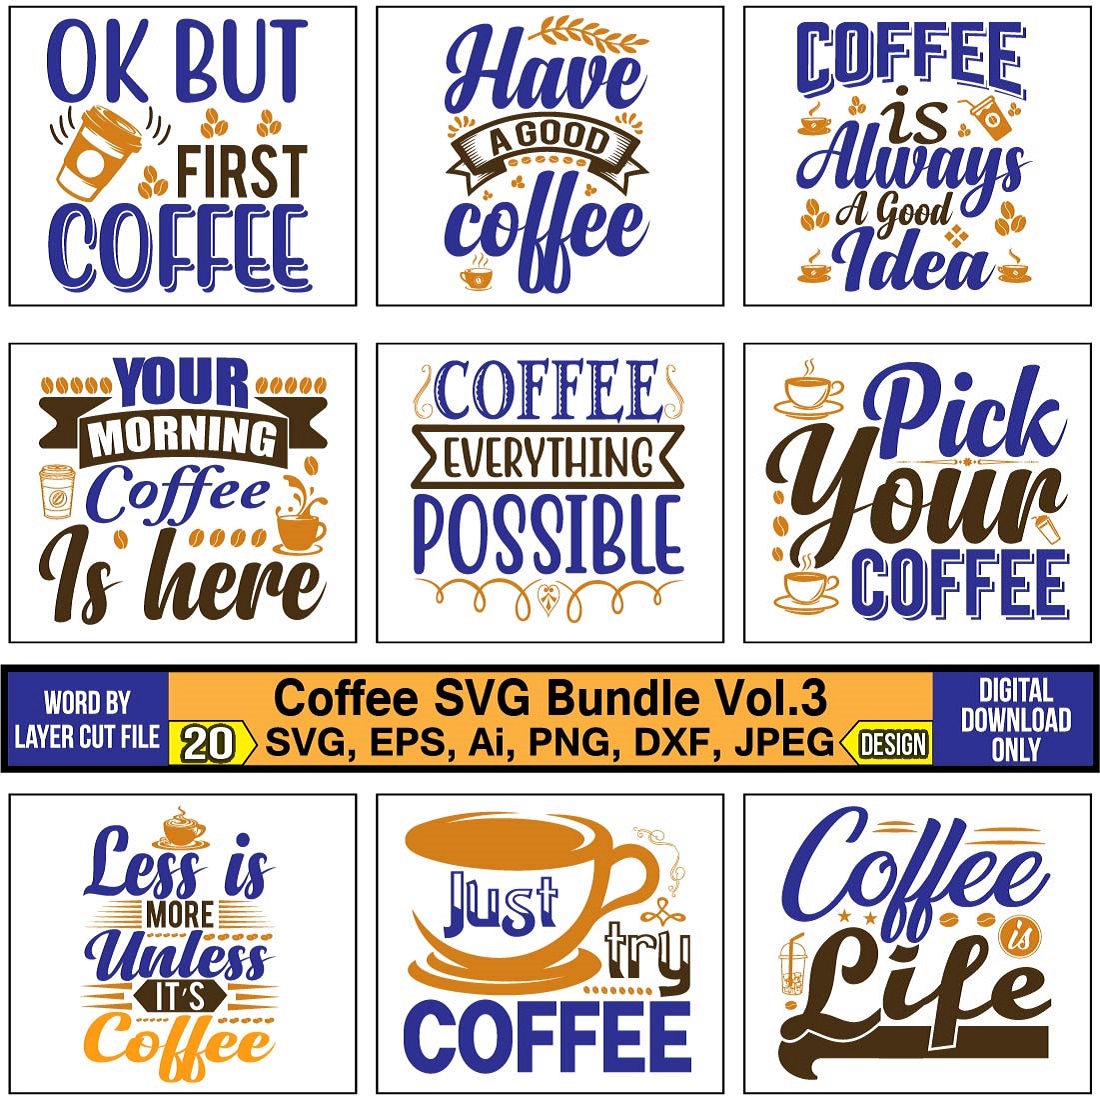 T-Shirt Coffee SVG Design Bundle cover image.